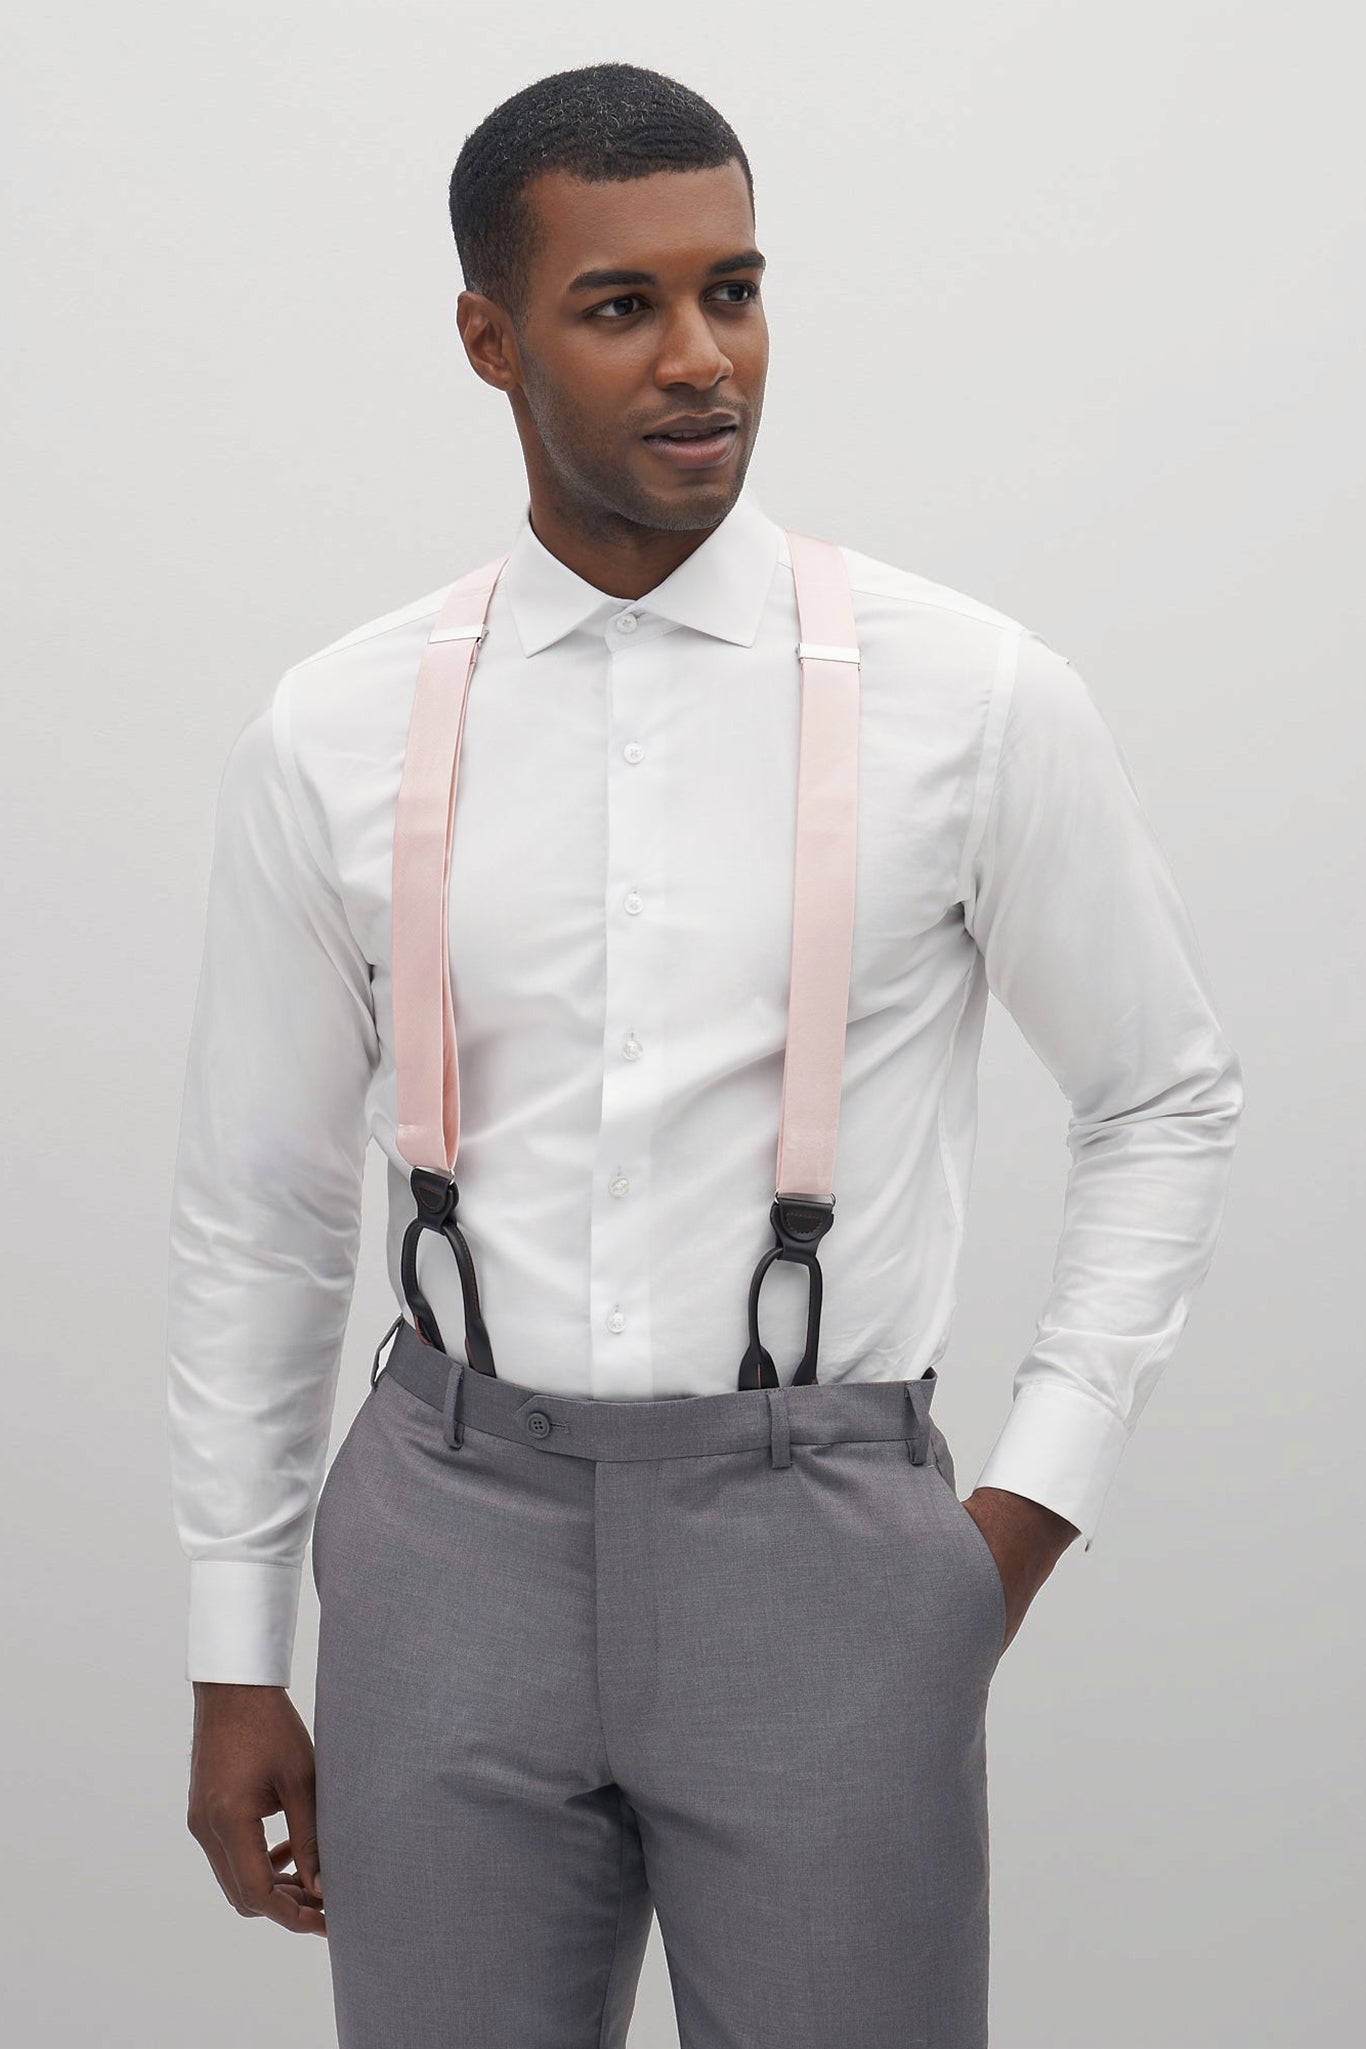 Blush Pink Grosgrain Suspenders by SuitShop, front view